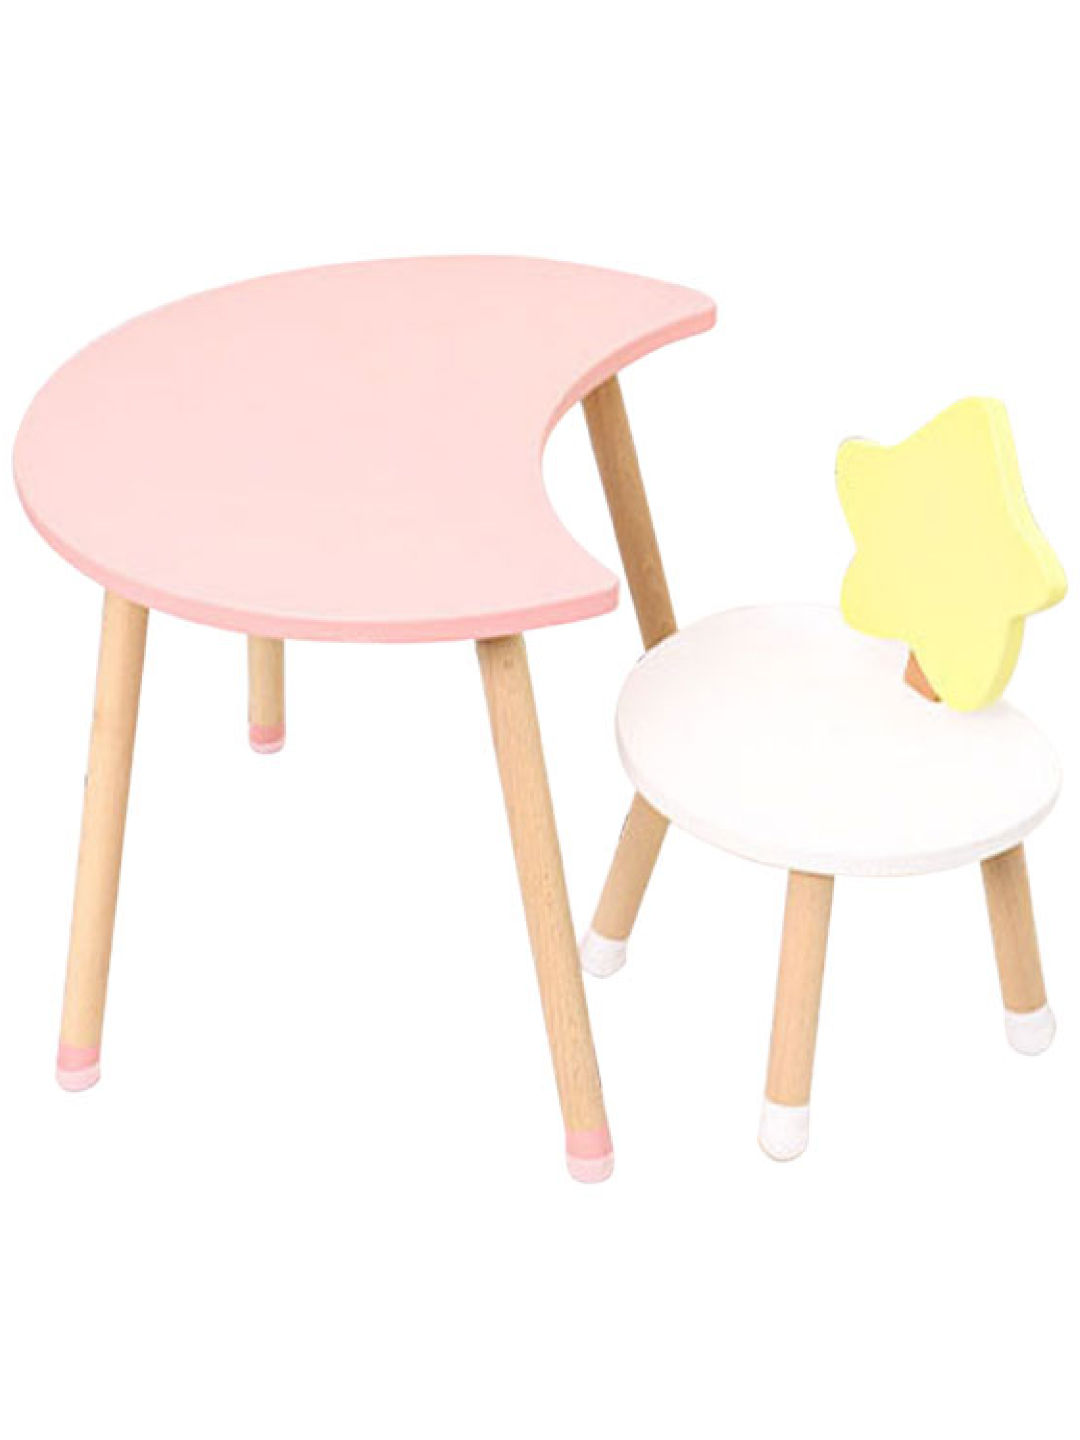 Juju Nursery Moon and Star Table and Chair Set